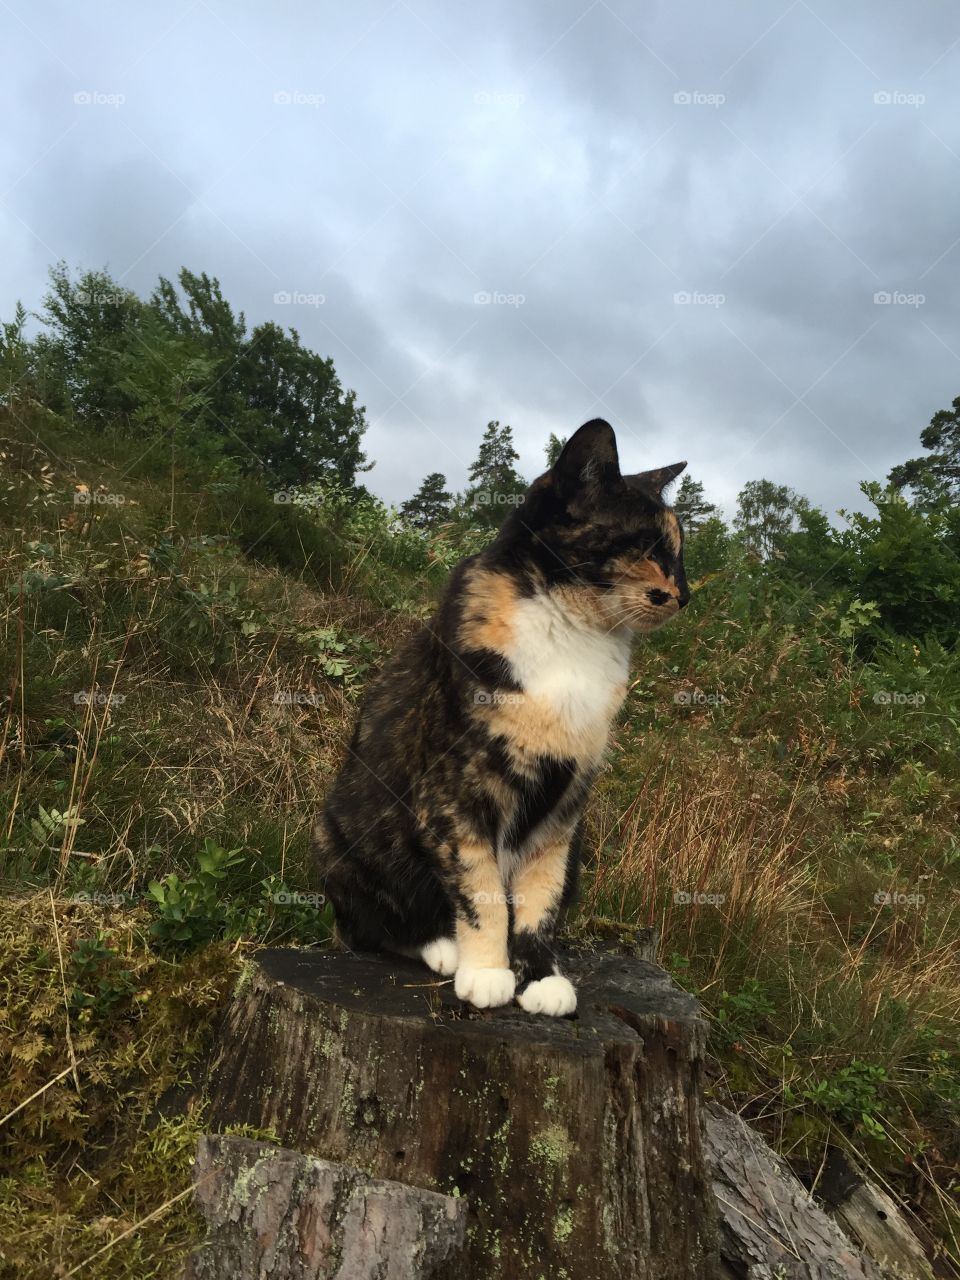 Cat on stump 